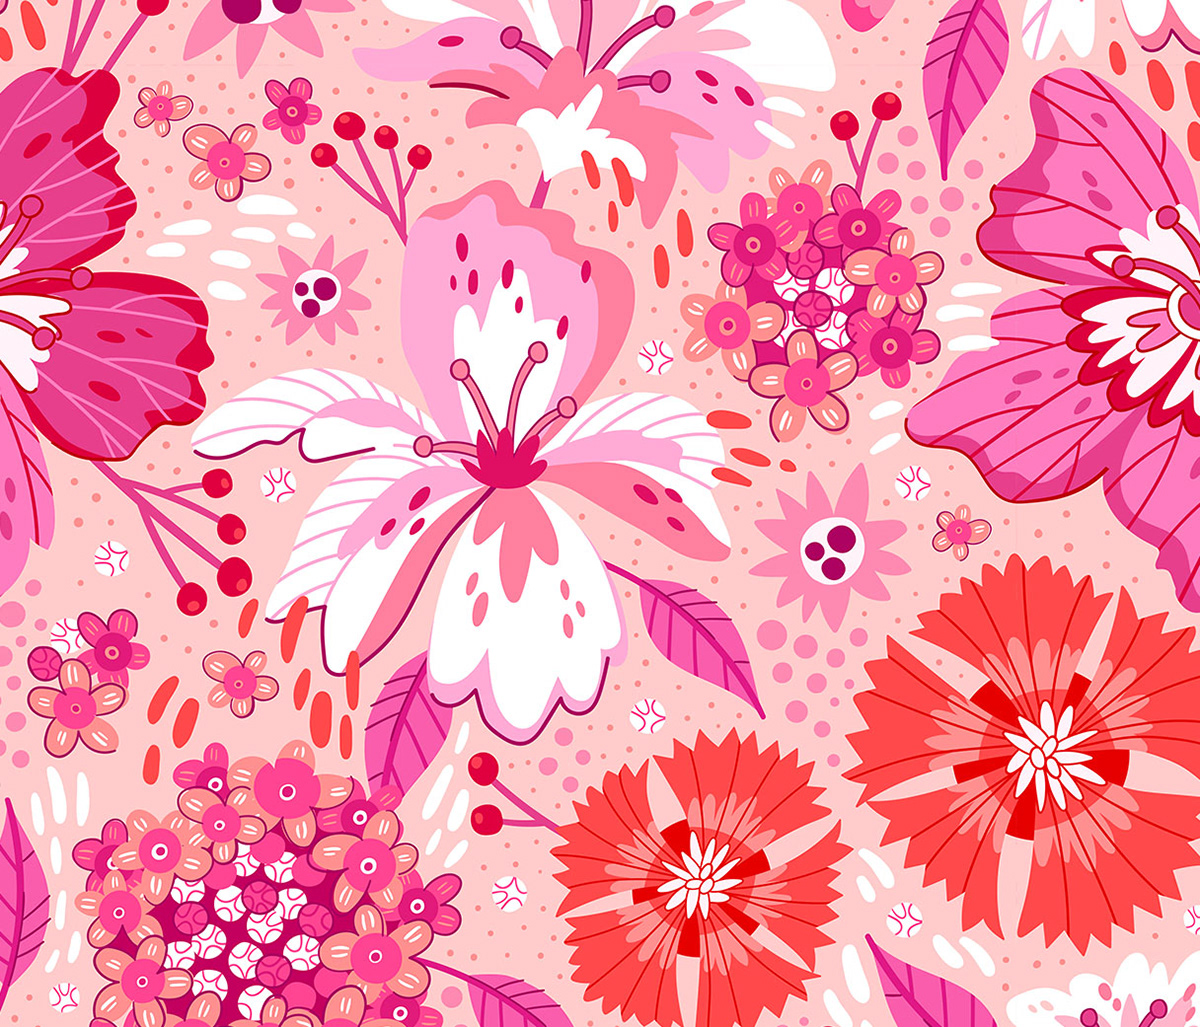 Joyful Pink Blooms Pattern with flowers by Mona Monash